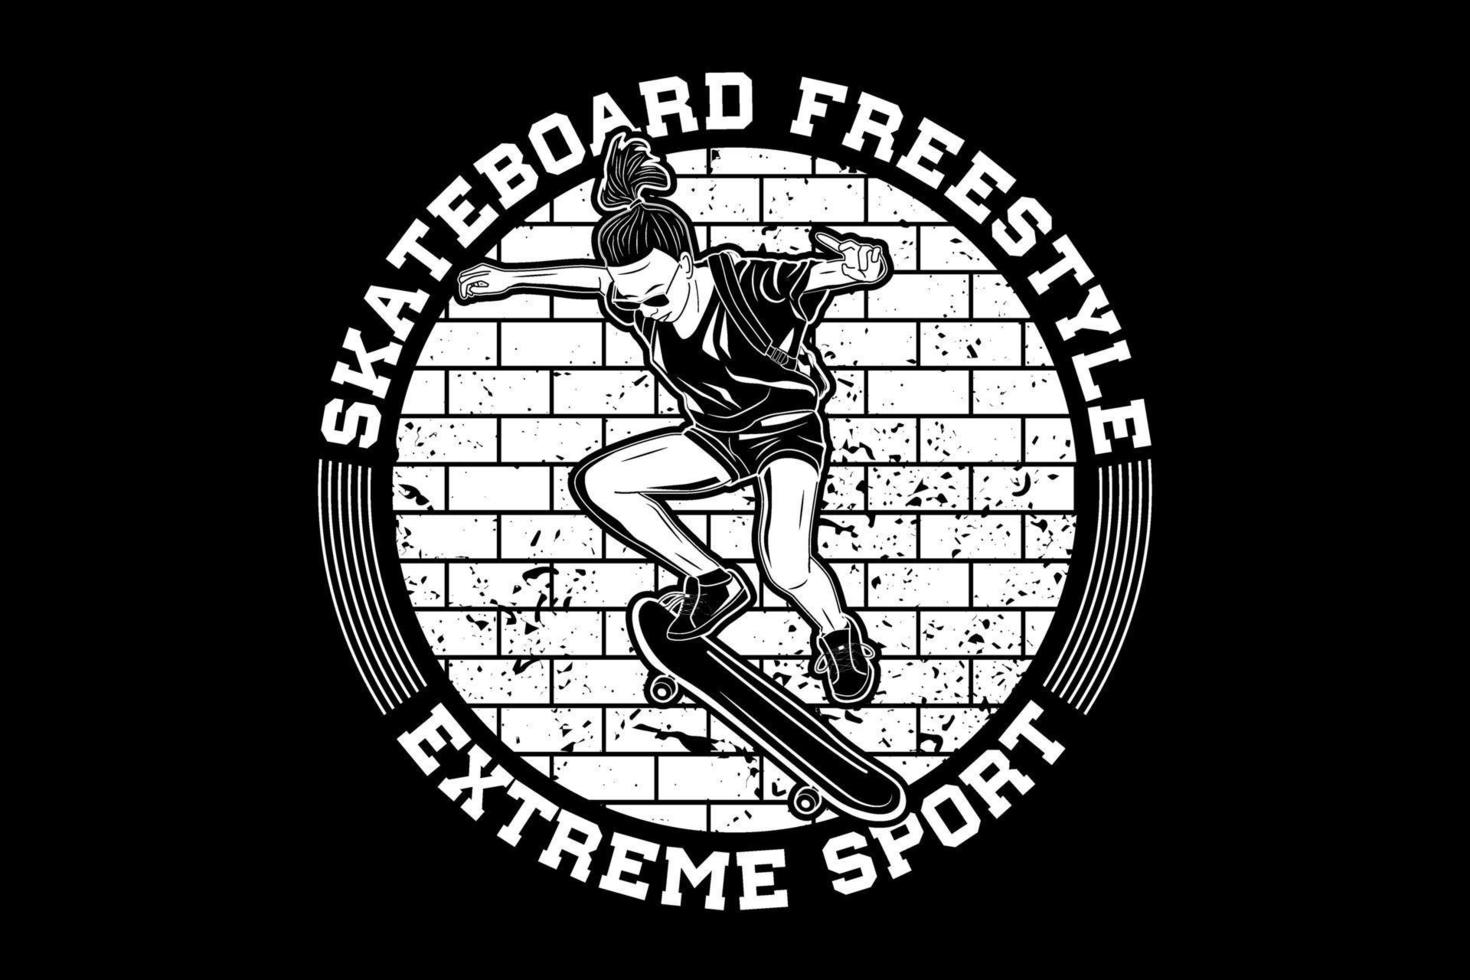 Skateboard Freestyle Extremsport Design Silhouette vektor